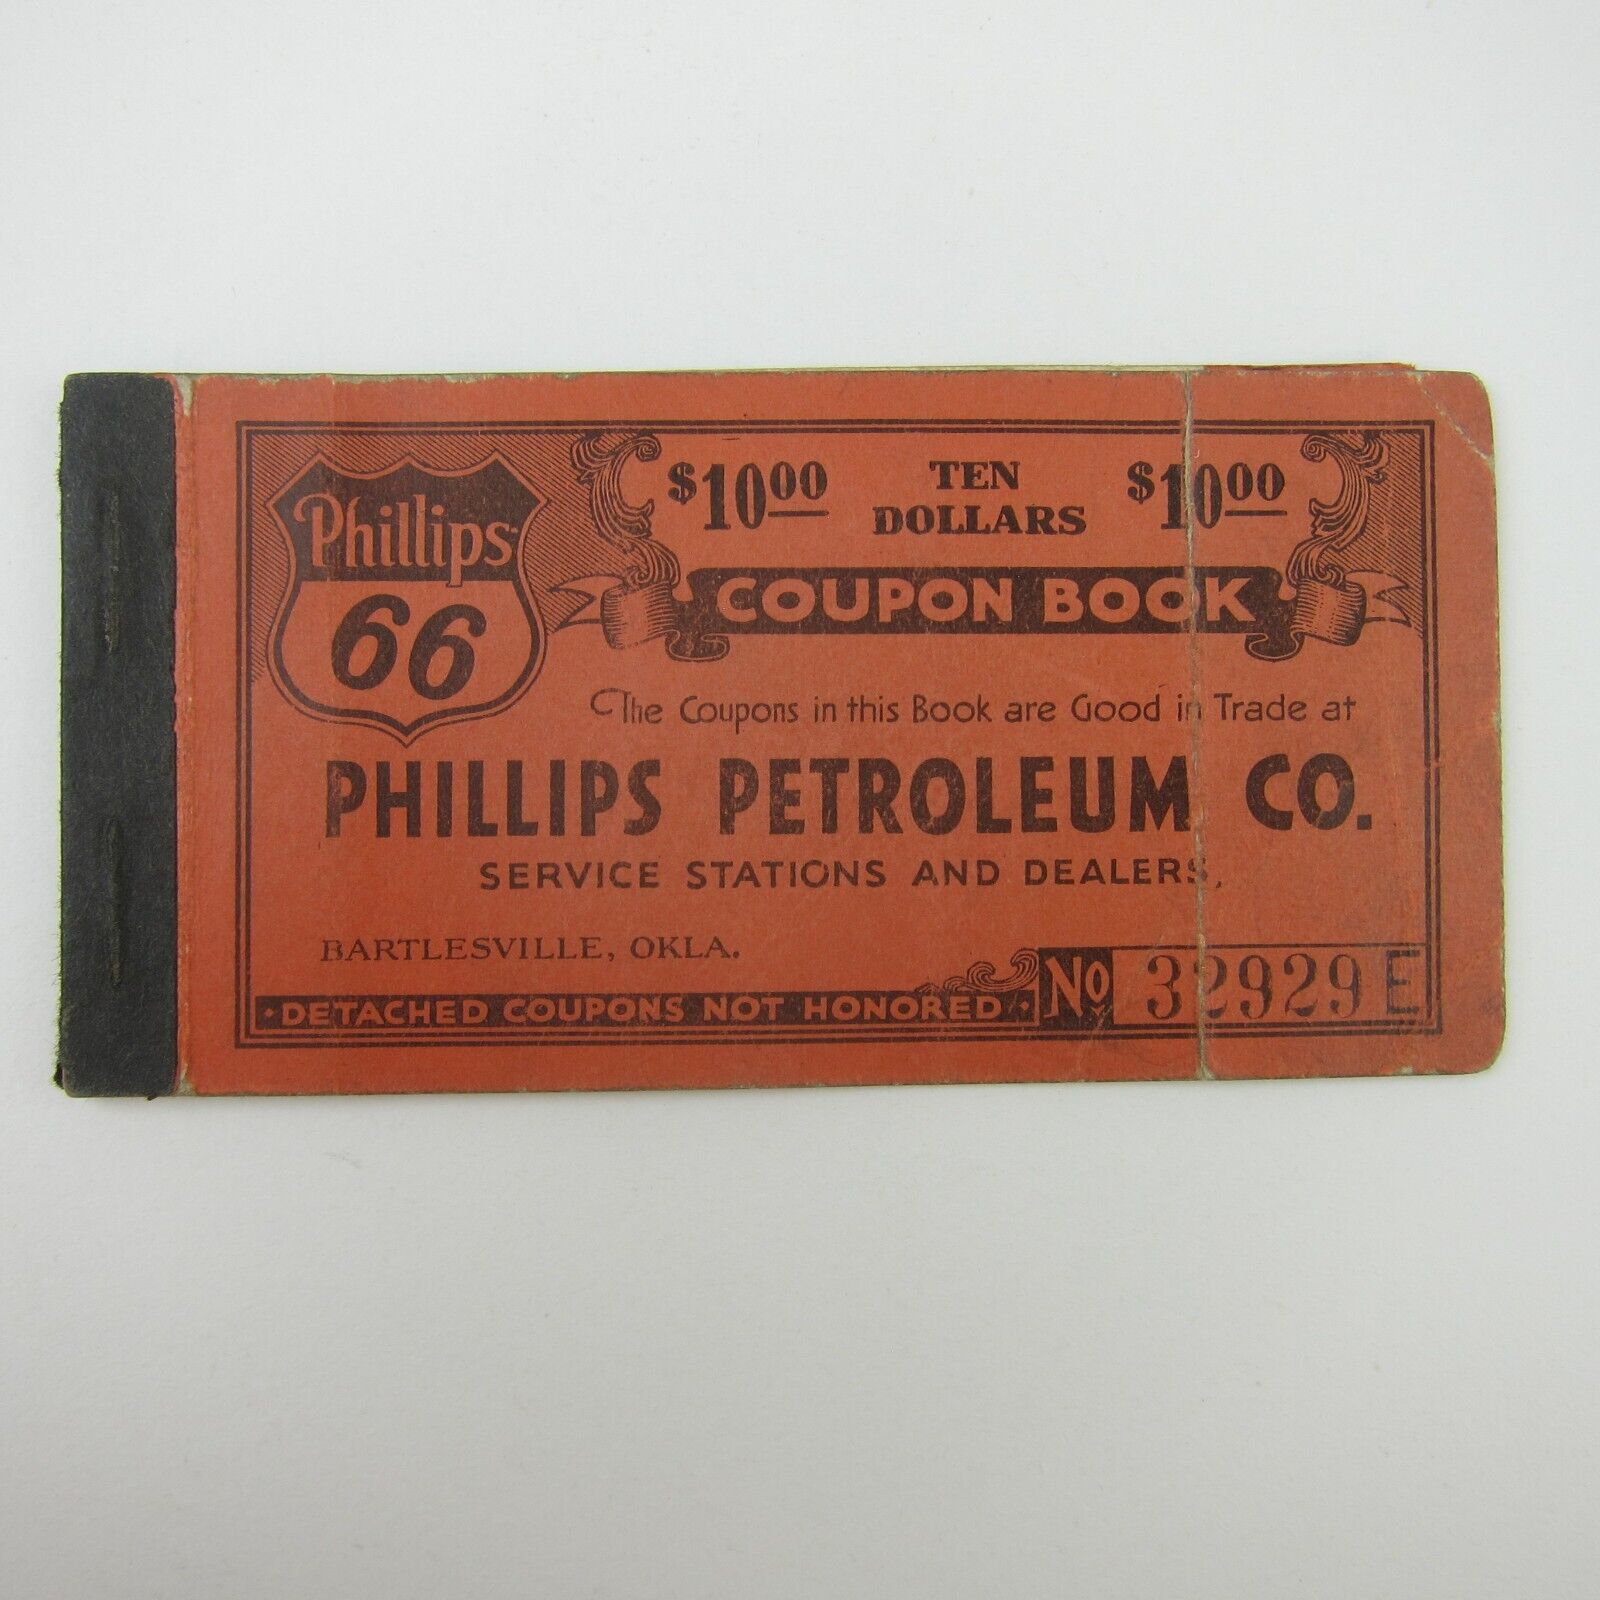 Phillips 66 Phillips Petroleum Co Gasoline Coupon Book Gas Station Vintage 1940s